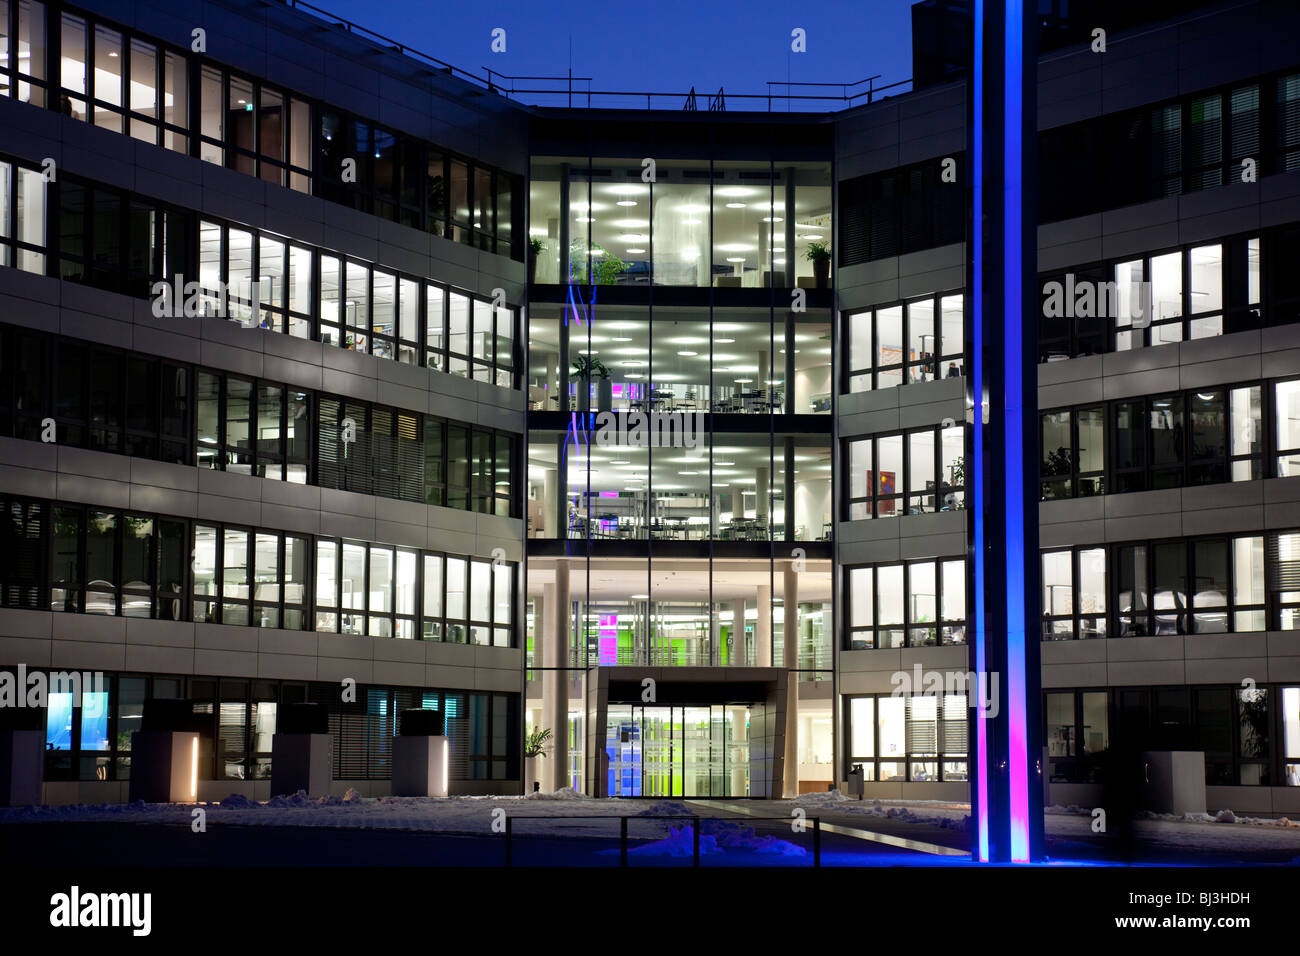 SAP headquarters, Walldorf, Germany. night shot, building, it-company, business software, Stock Photo